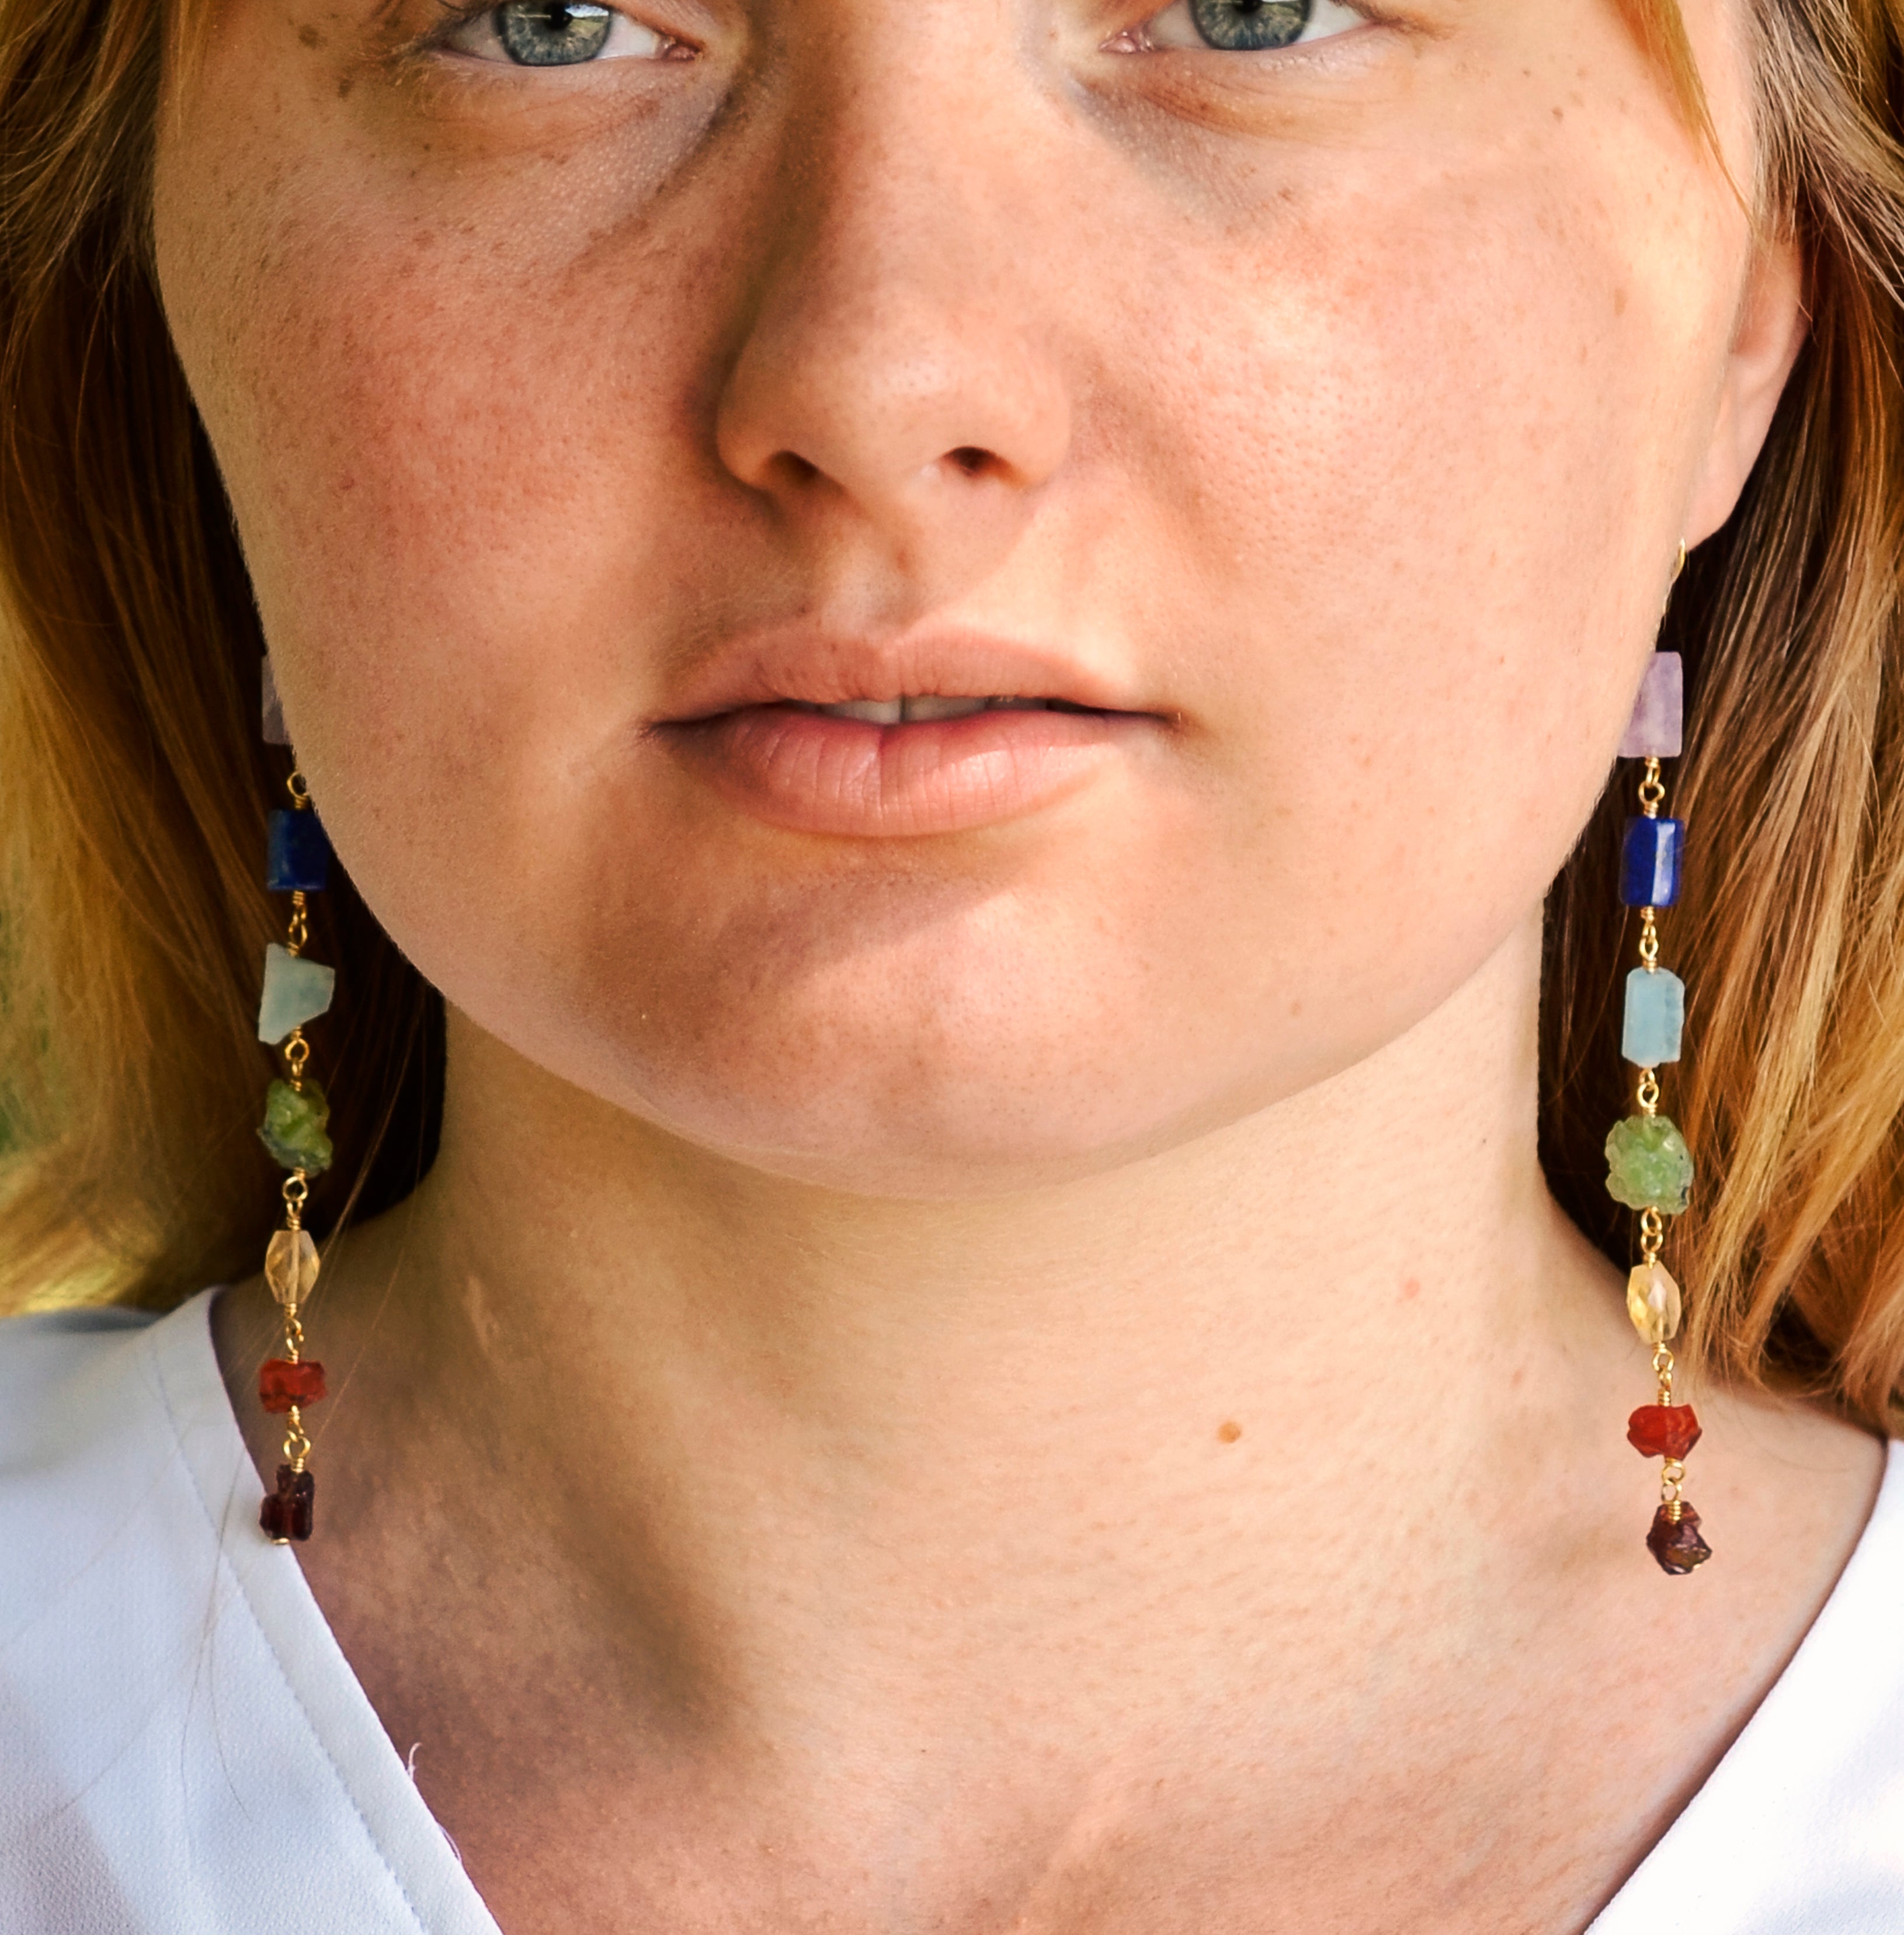 Third Eye Chakra Earrings | The Third Eye Chakra represents intuition